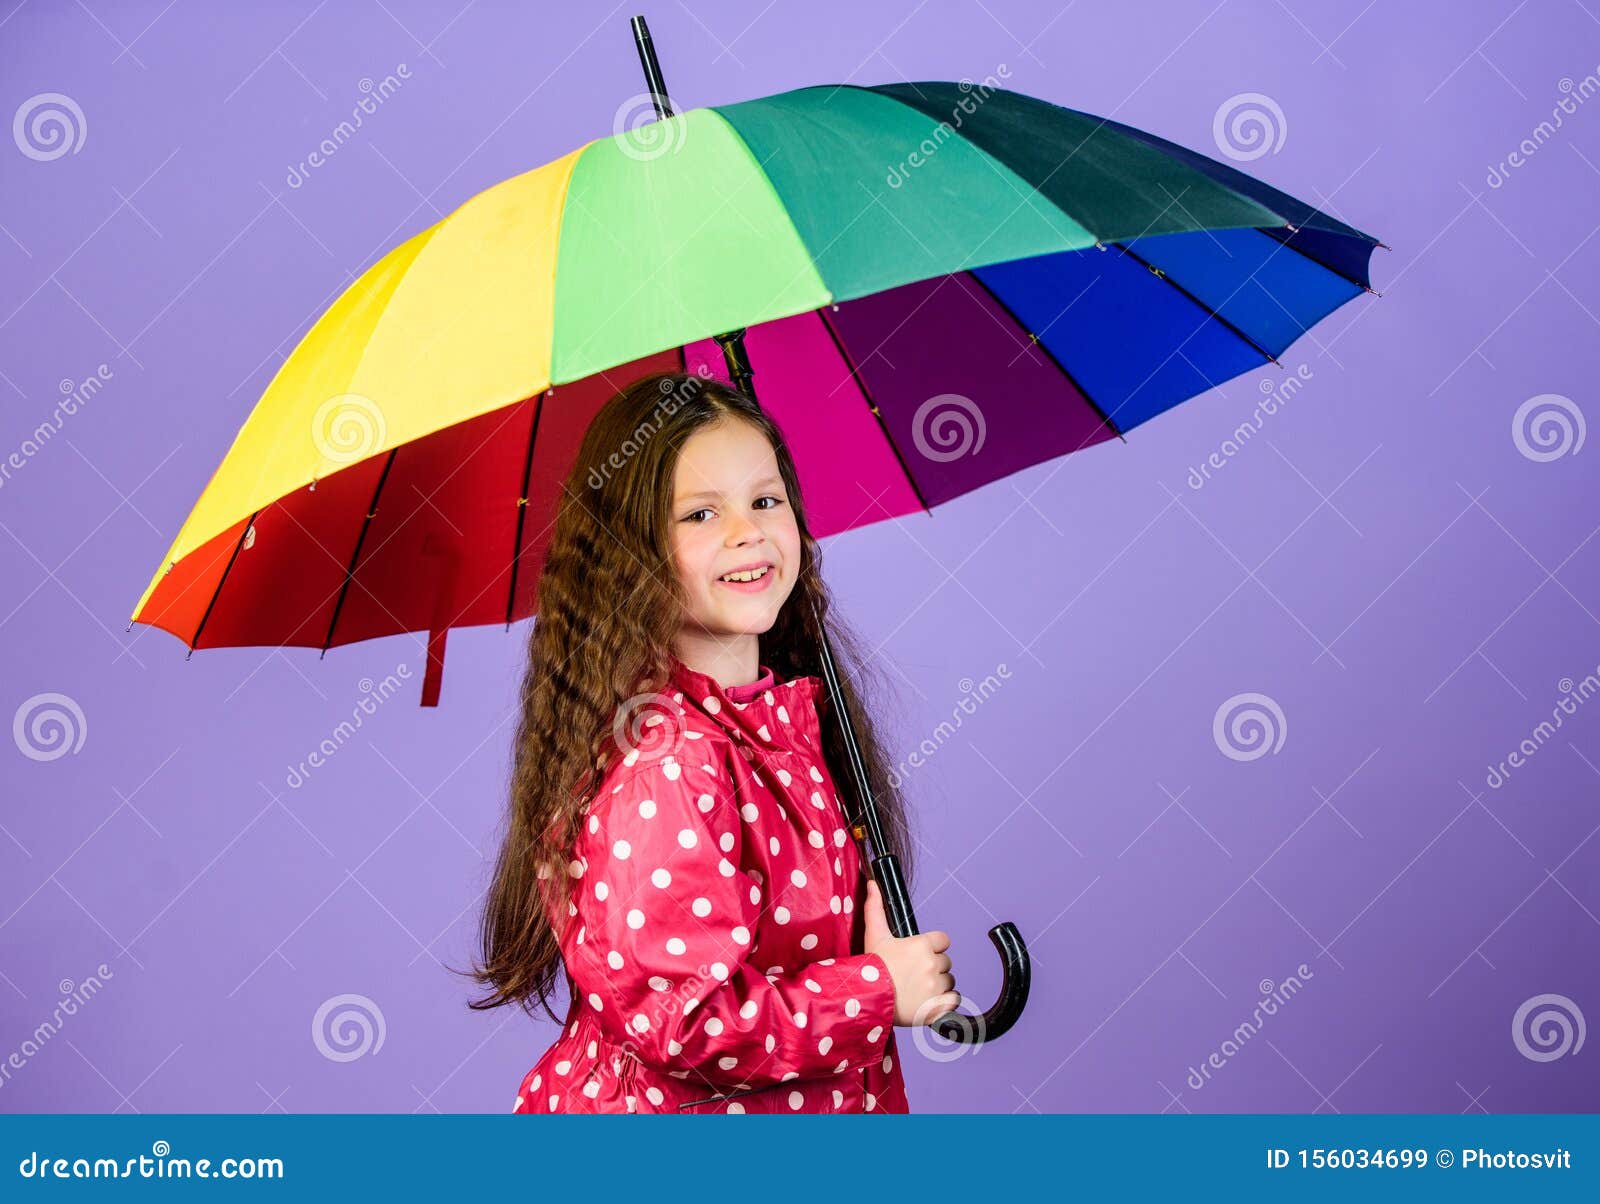 Be Rainbow In Someones Cloud Rainy Day Fun Happy Walk